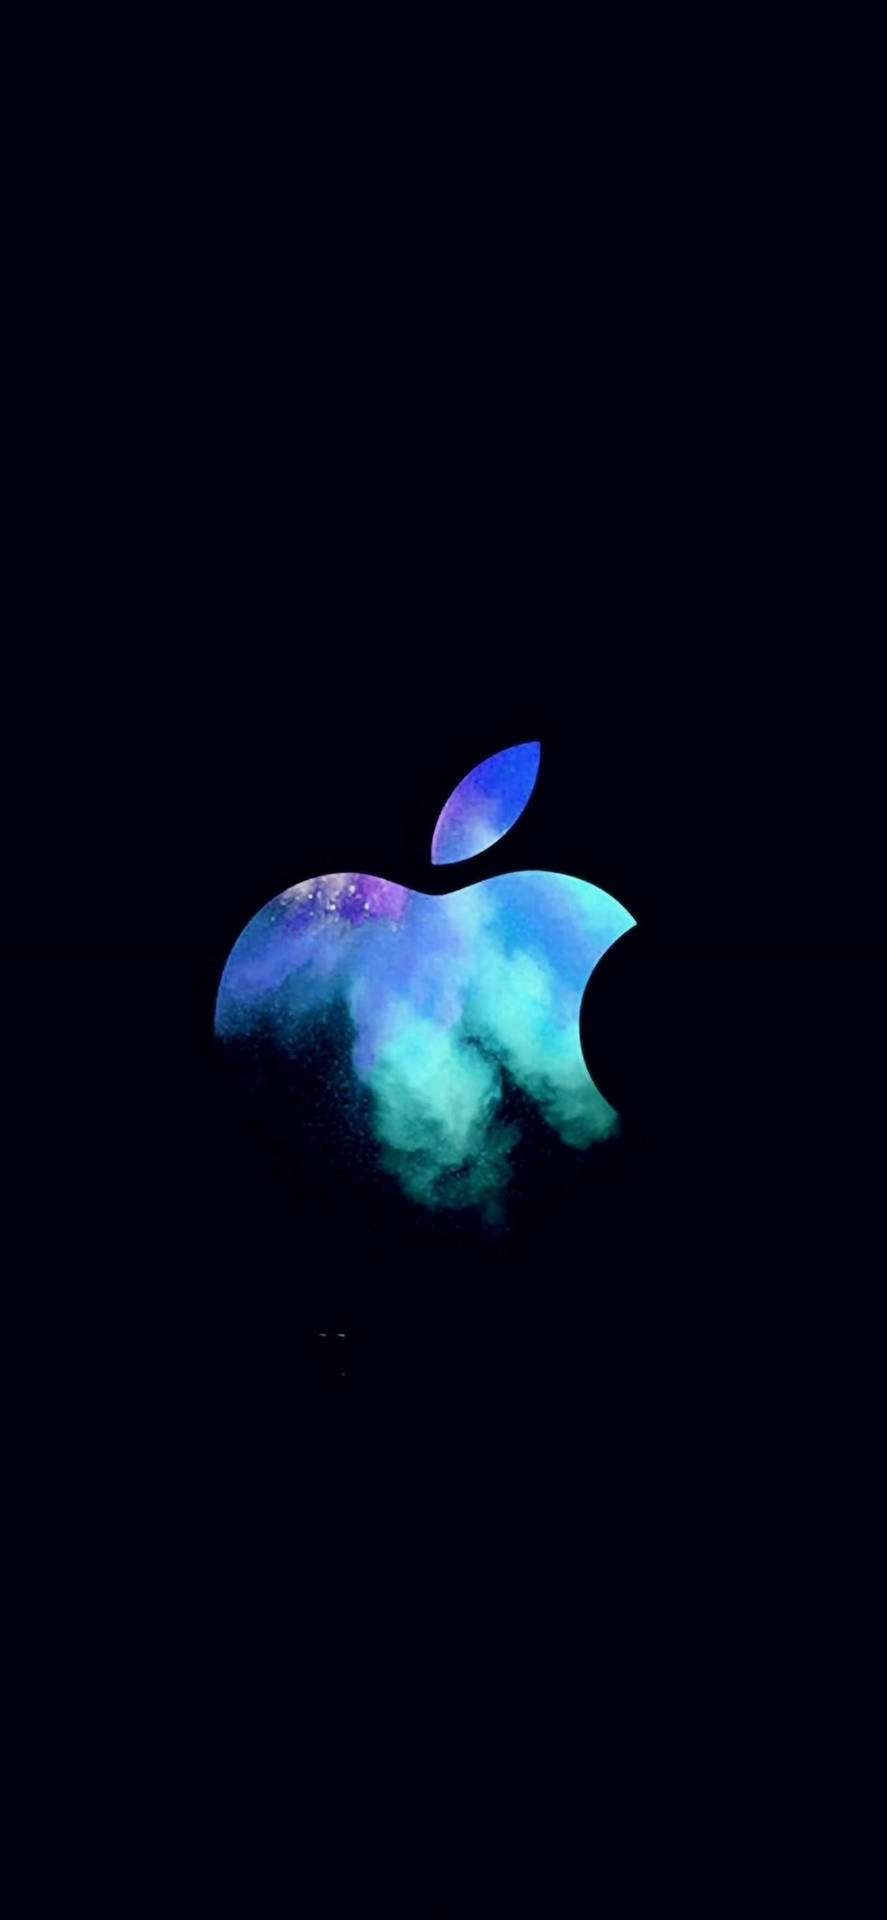 Gradient Apple In Black Apple Iphone Wallpaper